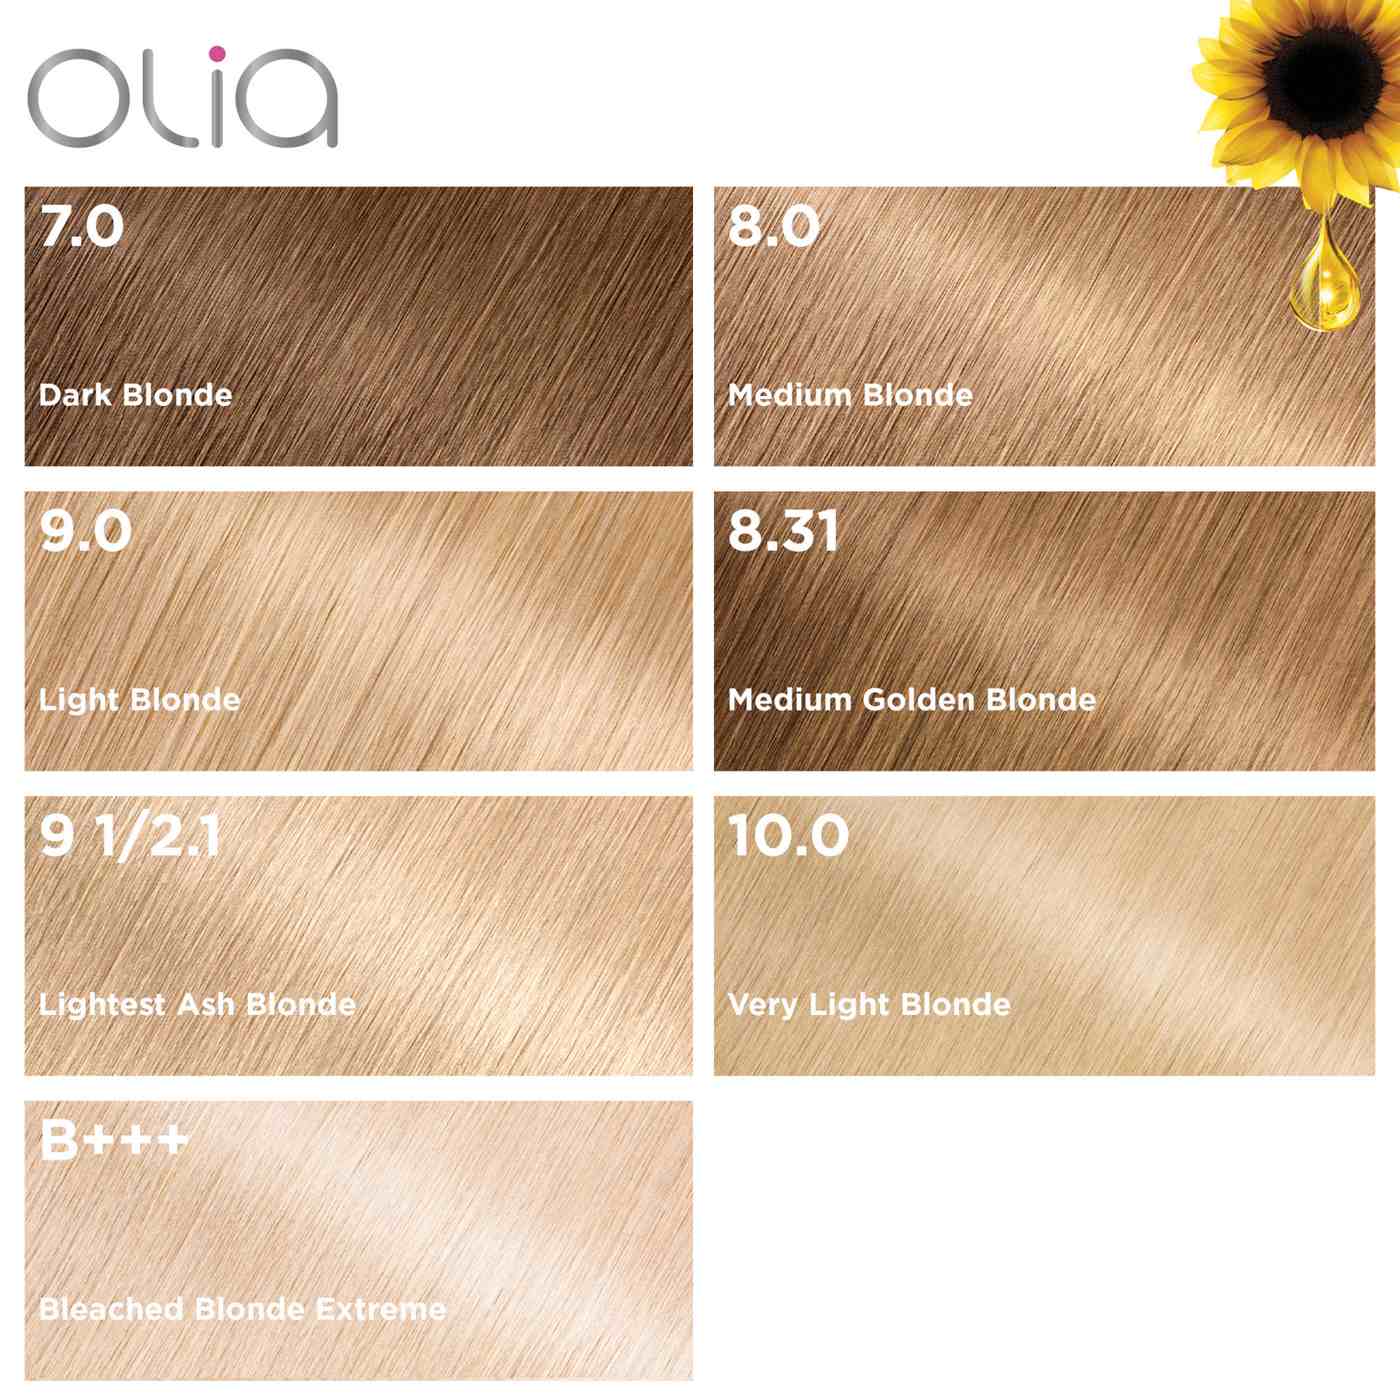 Garnier Olia Oil Powered Ammonia Free Permanent Hair Color 7.0 Dark Blonde; image 3 of 14